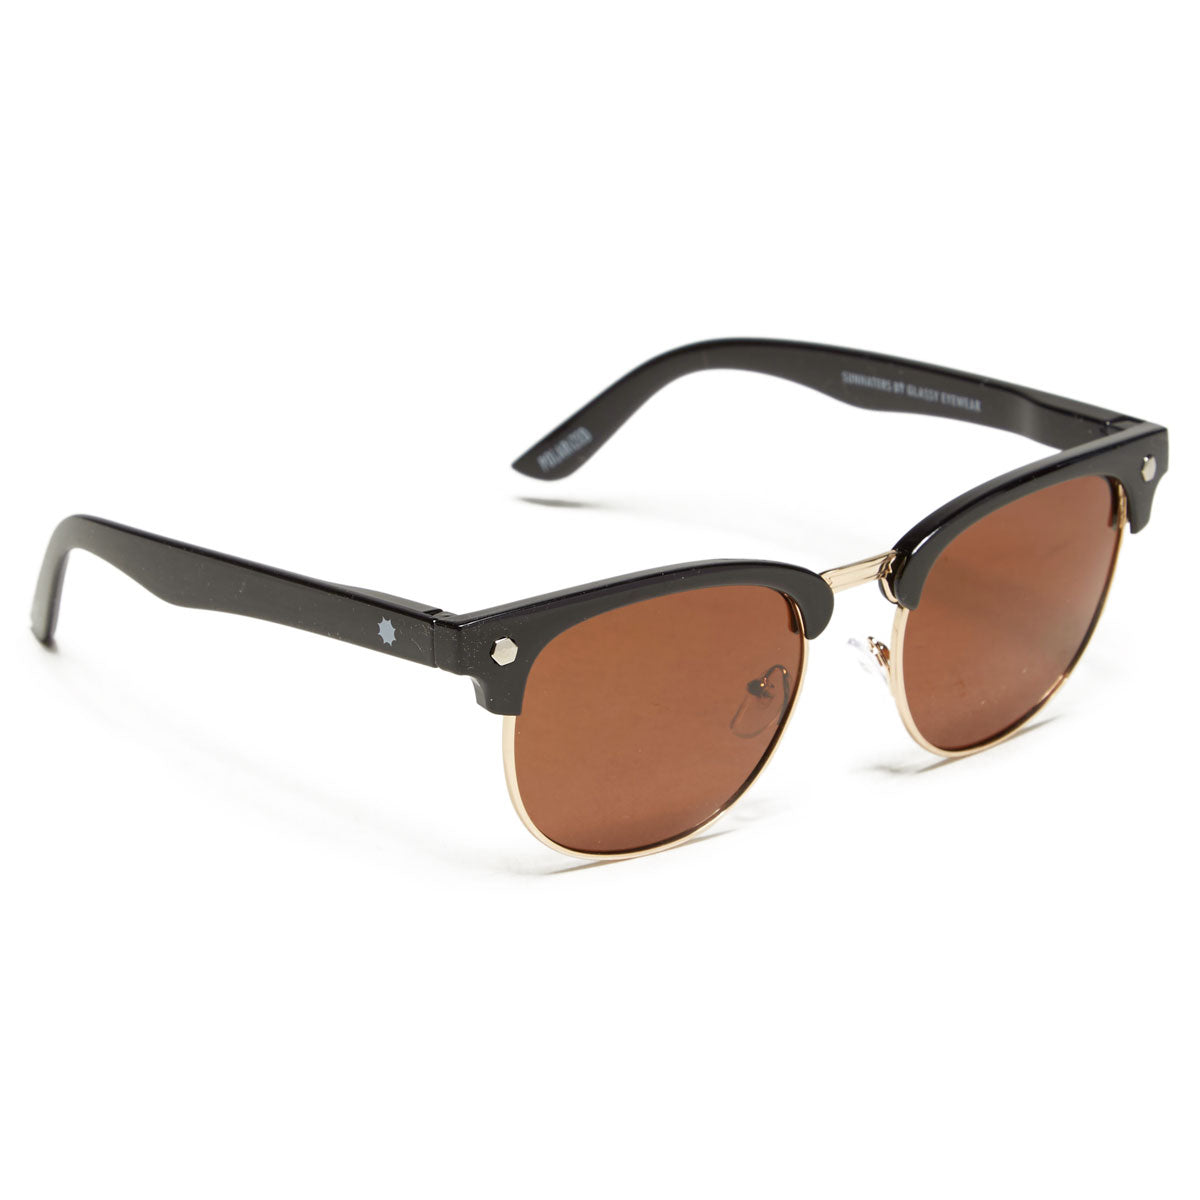 Glassy Morrison Polarized Sunglasses - Black/Brown image 1